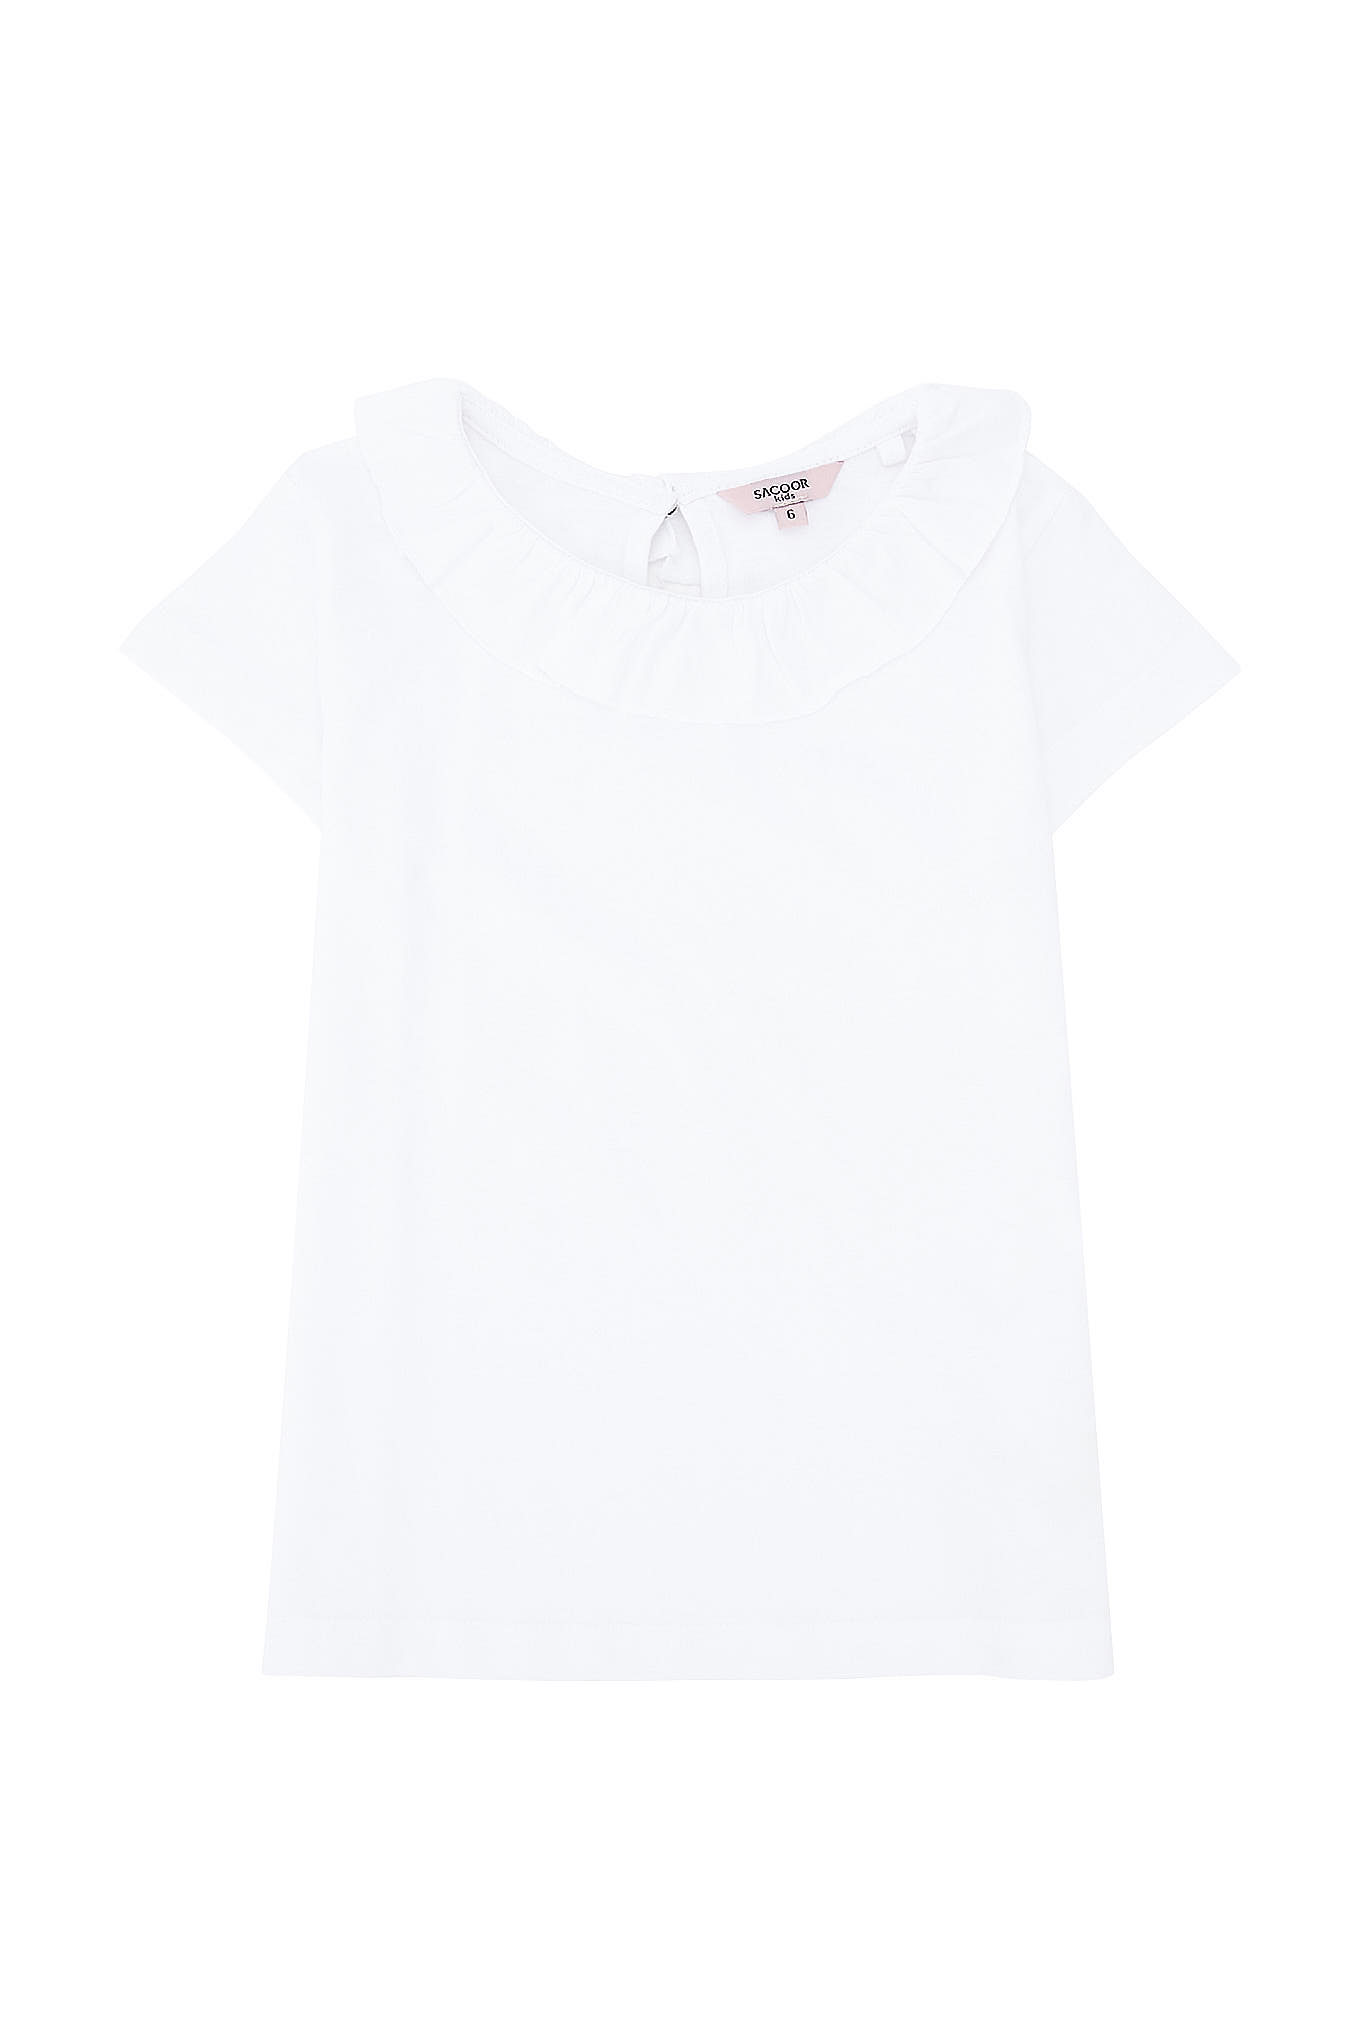 T-Shirt Branco Sport Rapariga